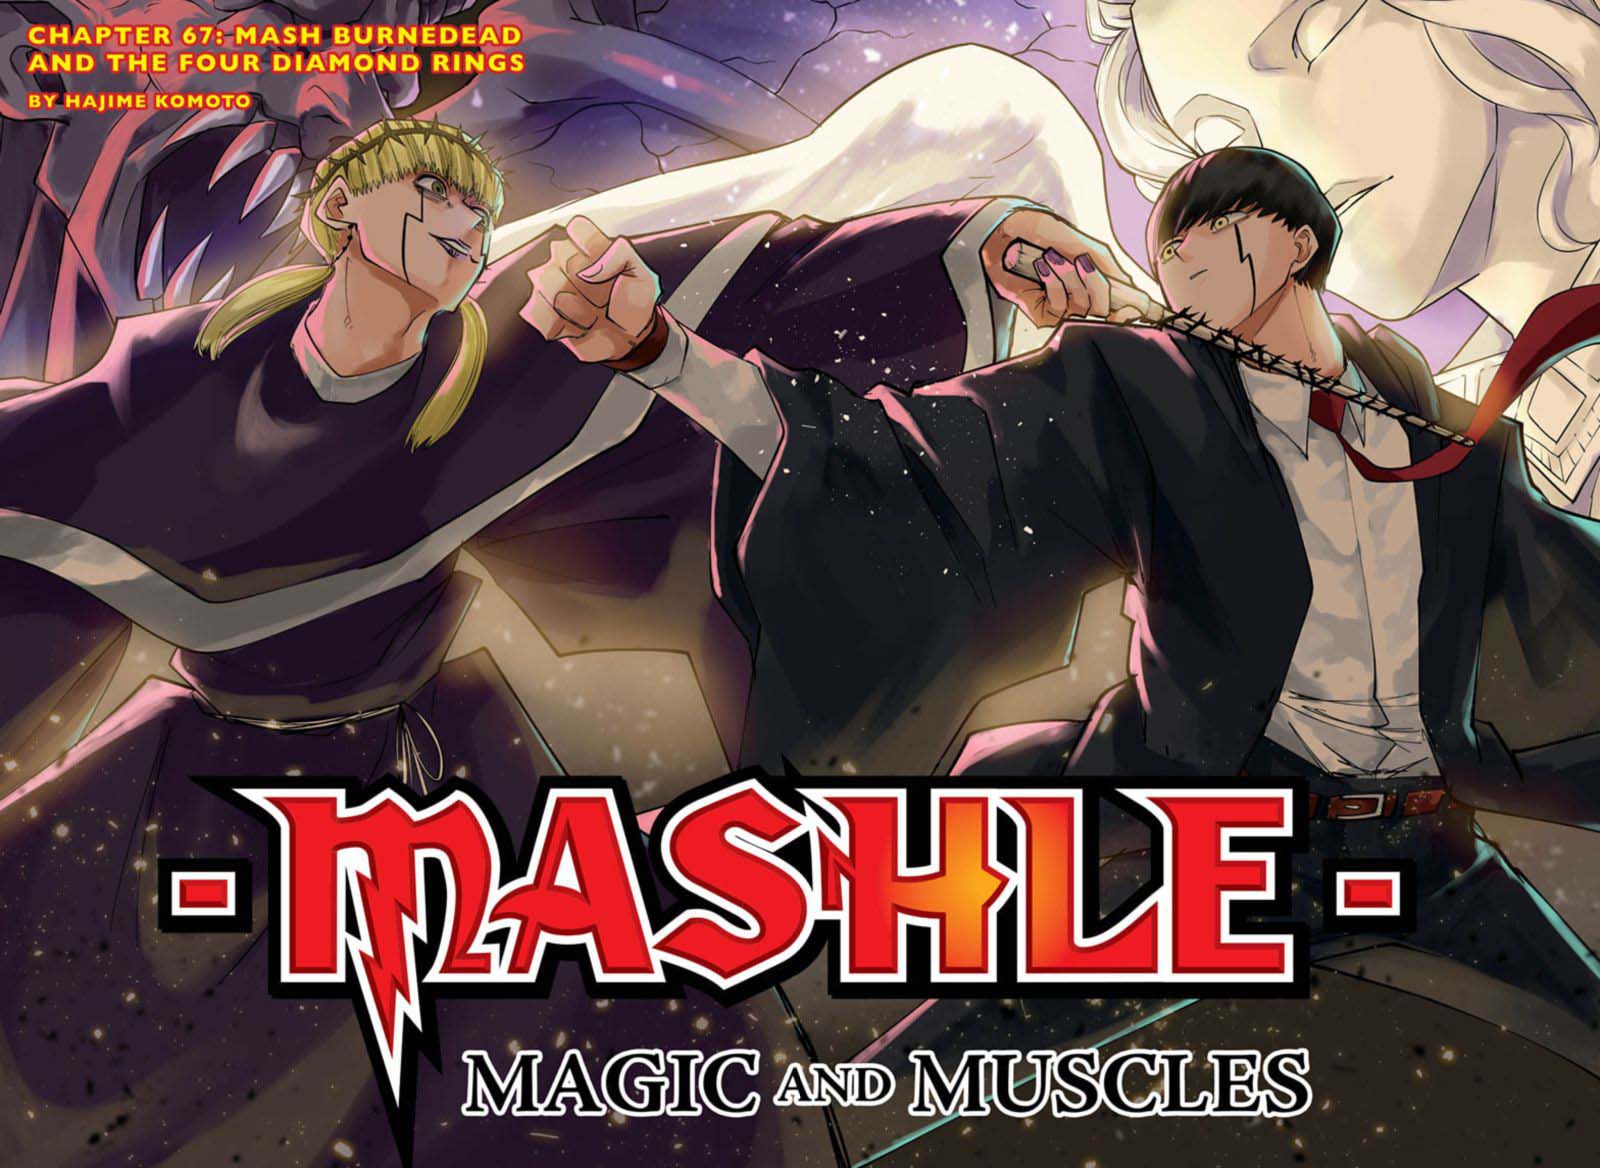 Mashle Magic And Muscles 67 2